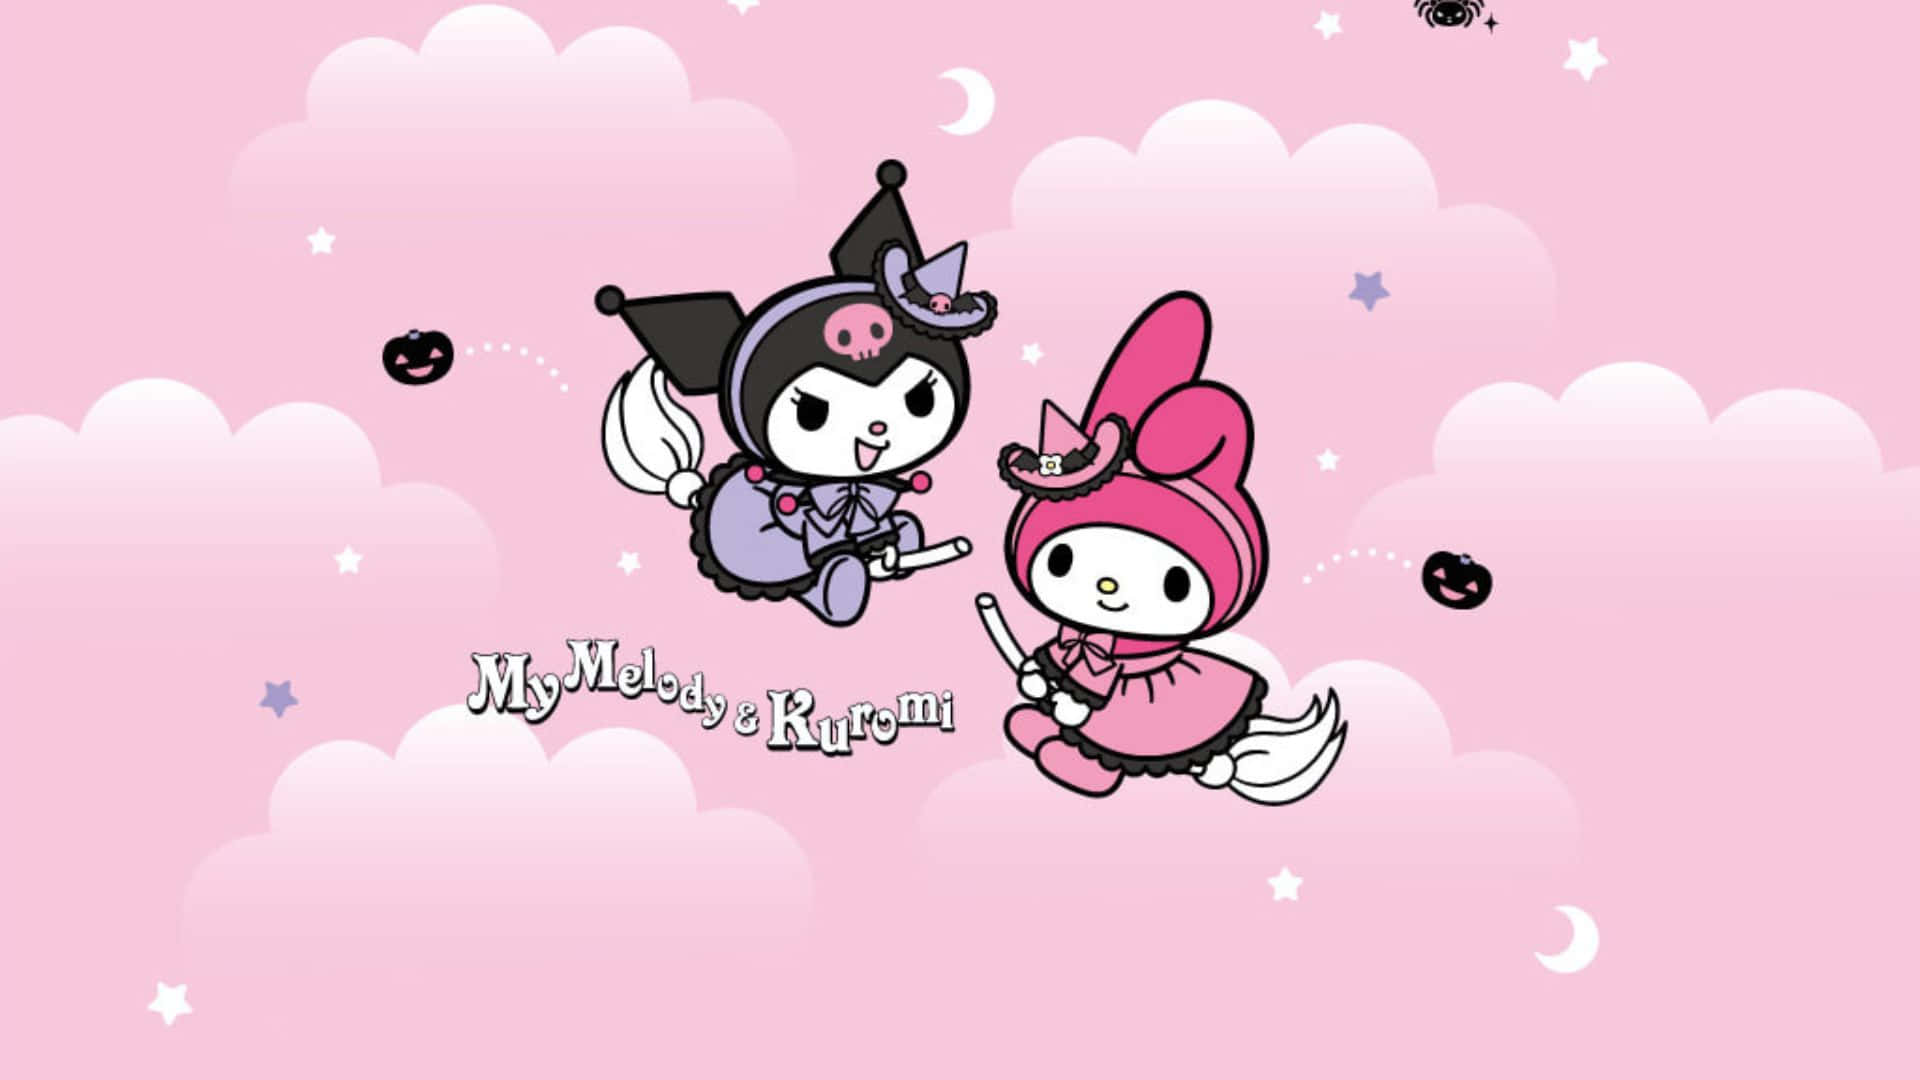 Kuromi Skeleton And Flying Hearts Hello Kitty Live Wallpaper